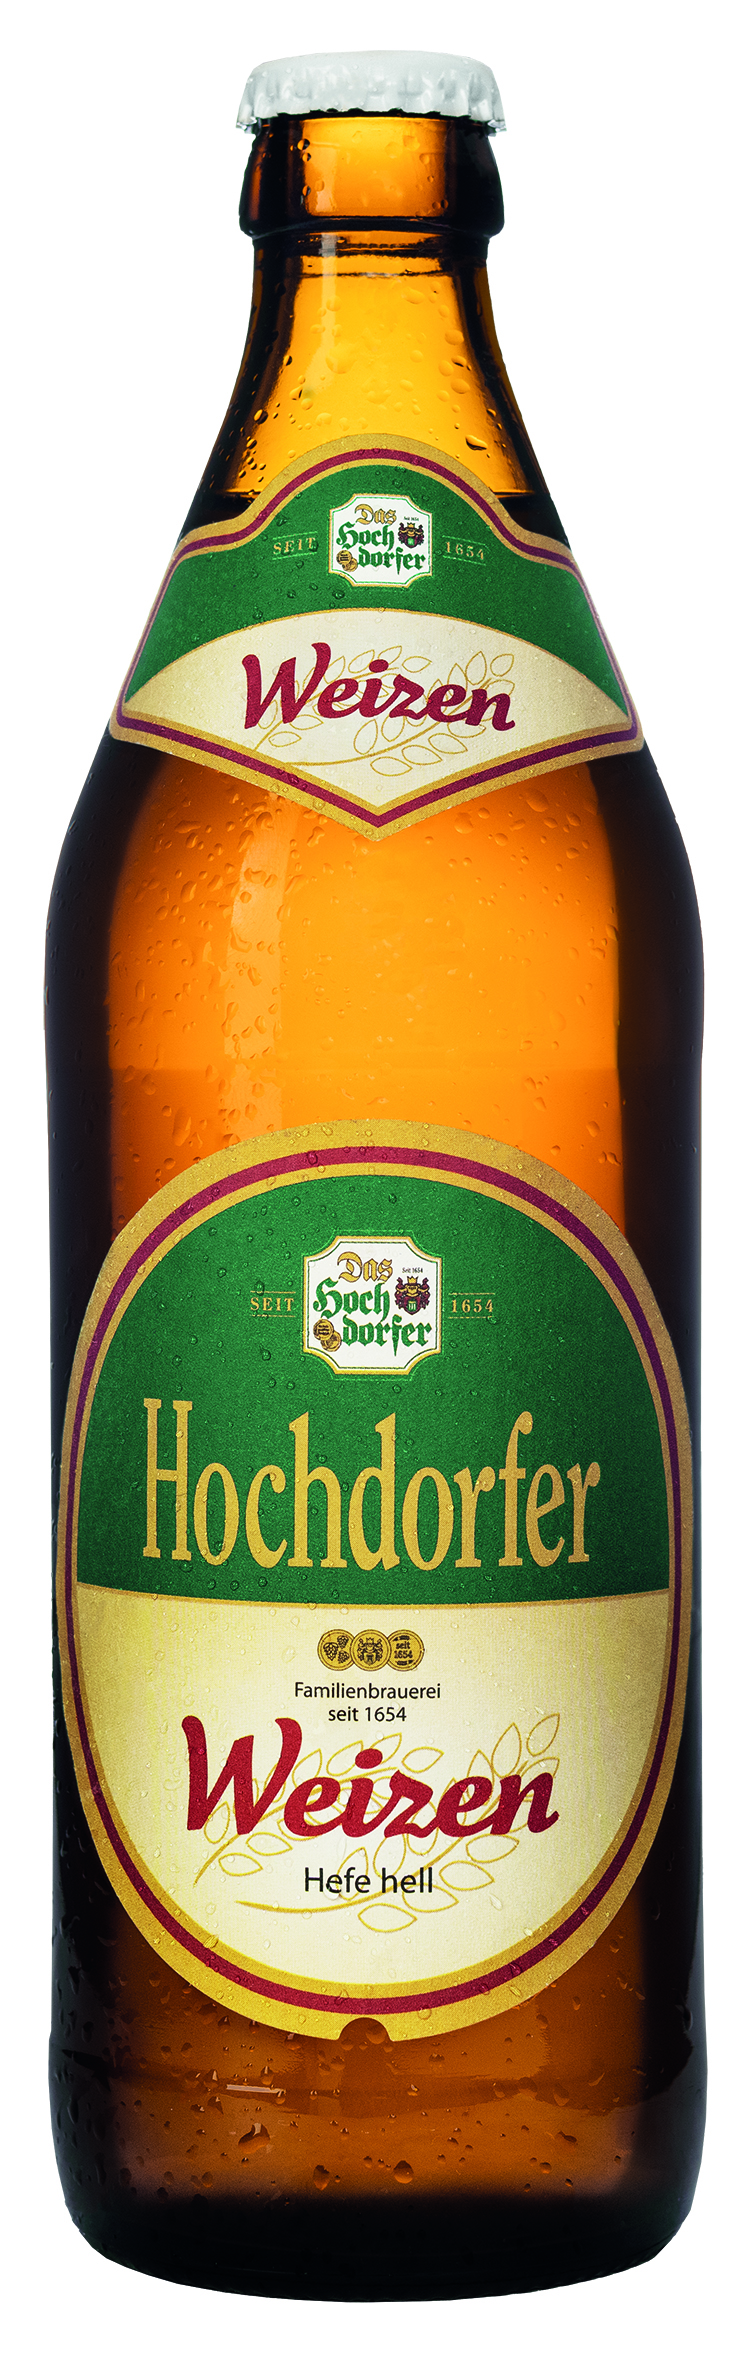 Hochdorfer Weizen